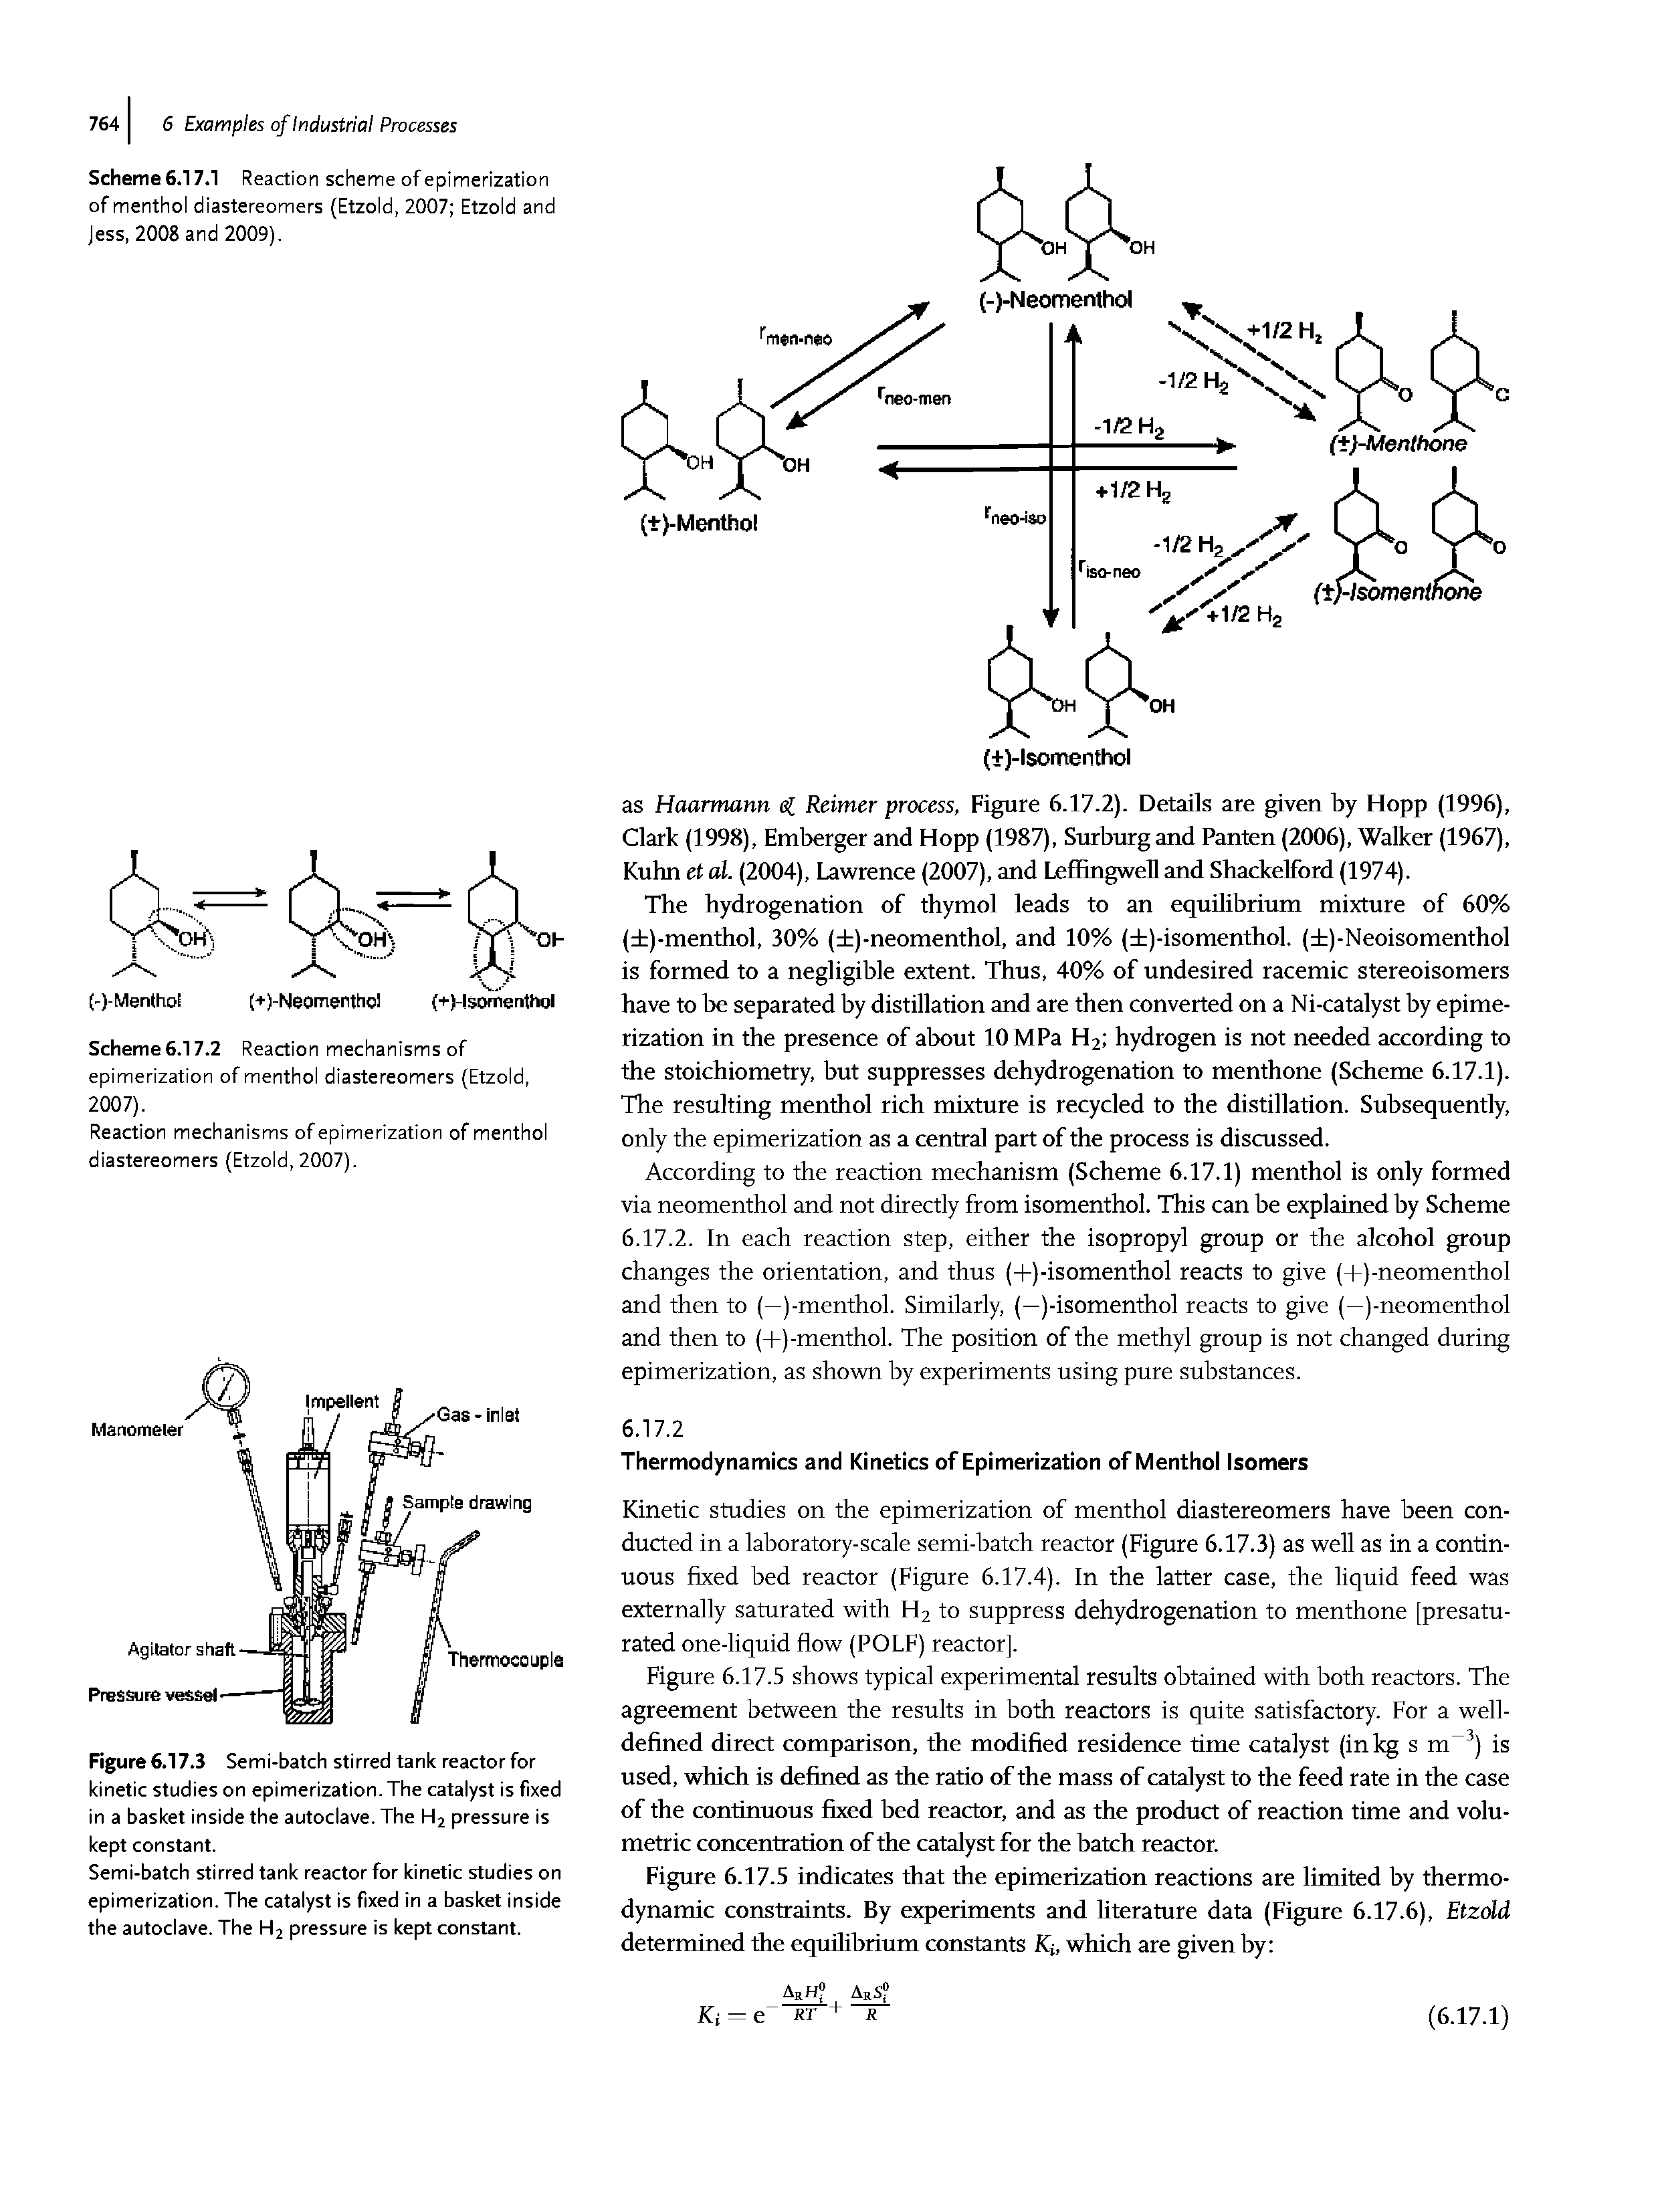 Scheme 6.17.1 Reaction scheme of epimerization of menthol diastereomers (Etzold, 2007 Etzold and Jess, 2008 and 2009).